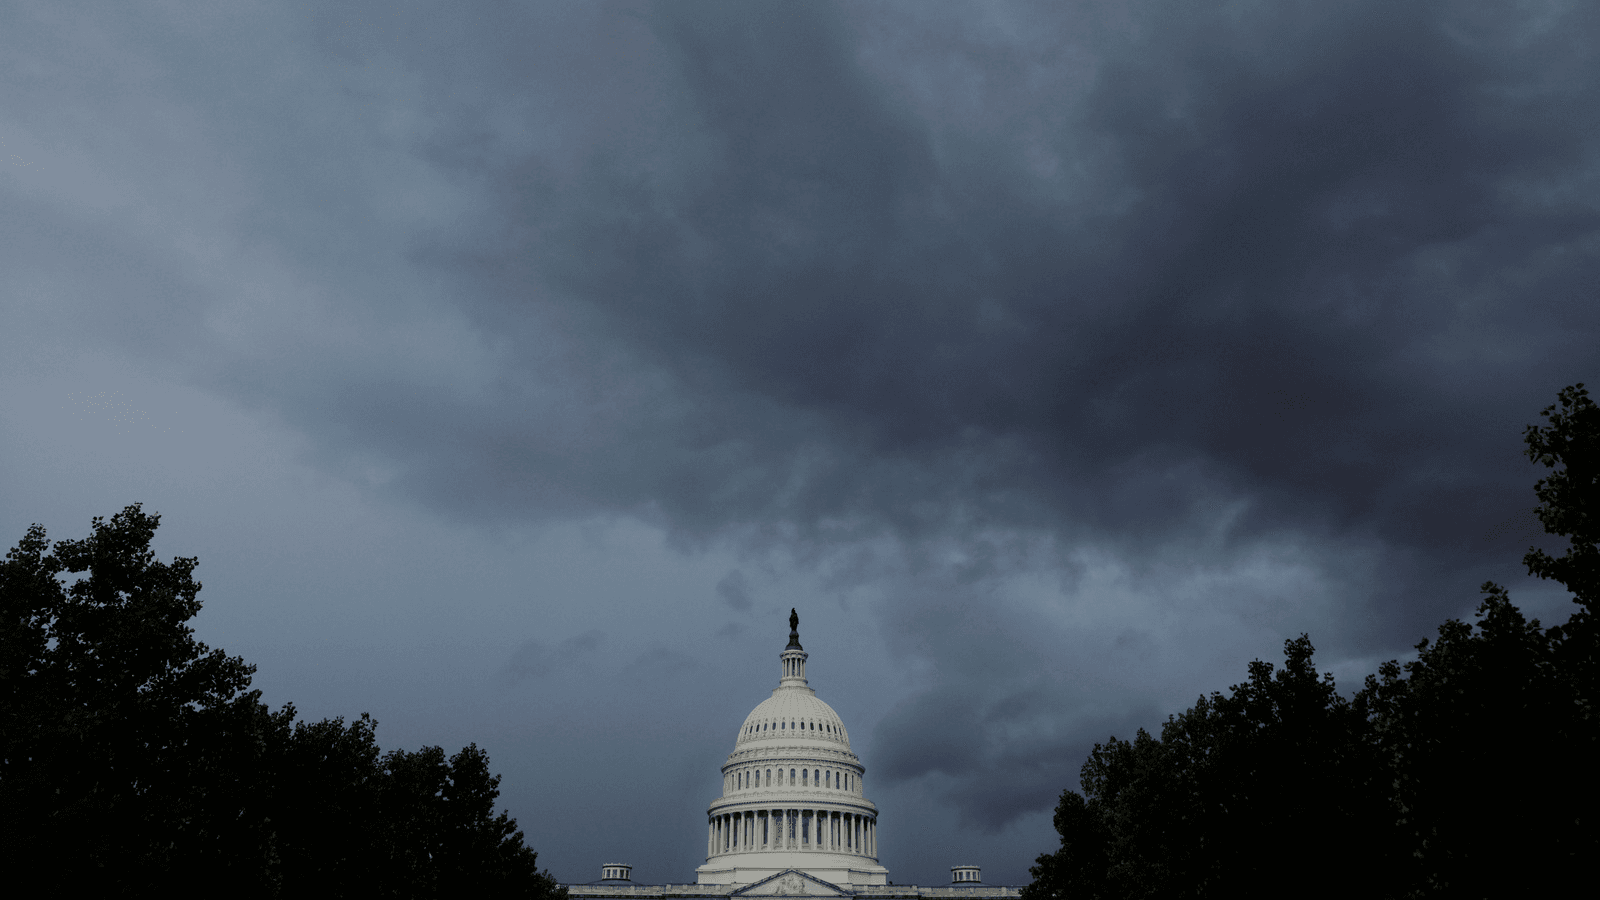 the US capitol under dark clouds